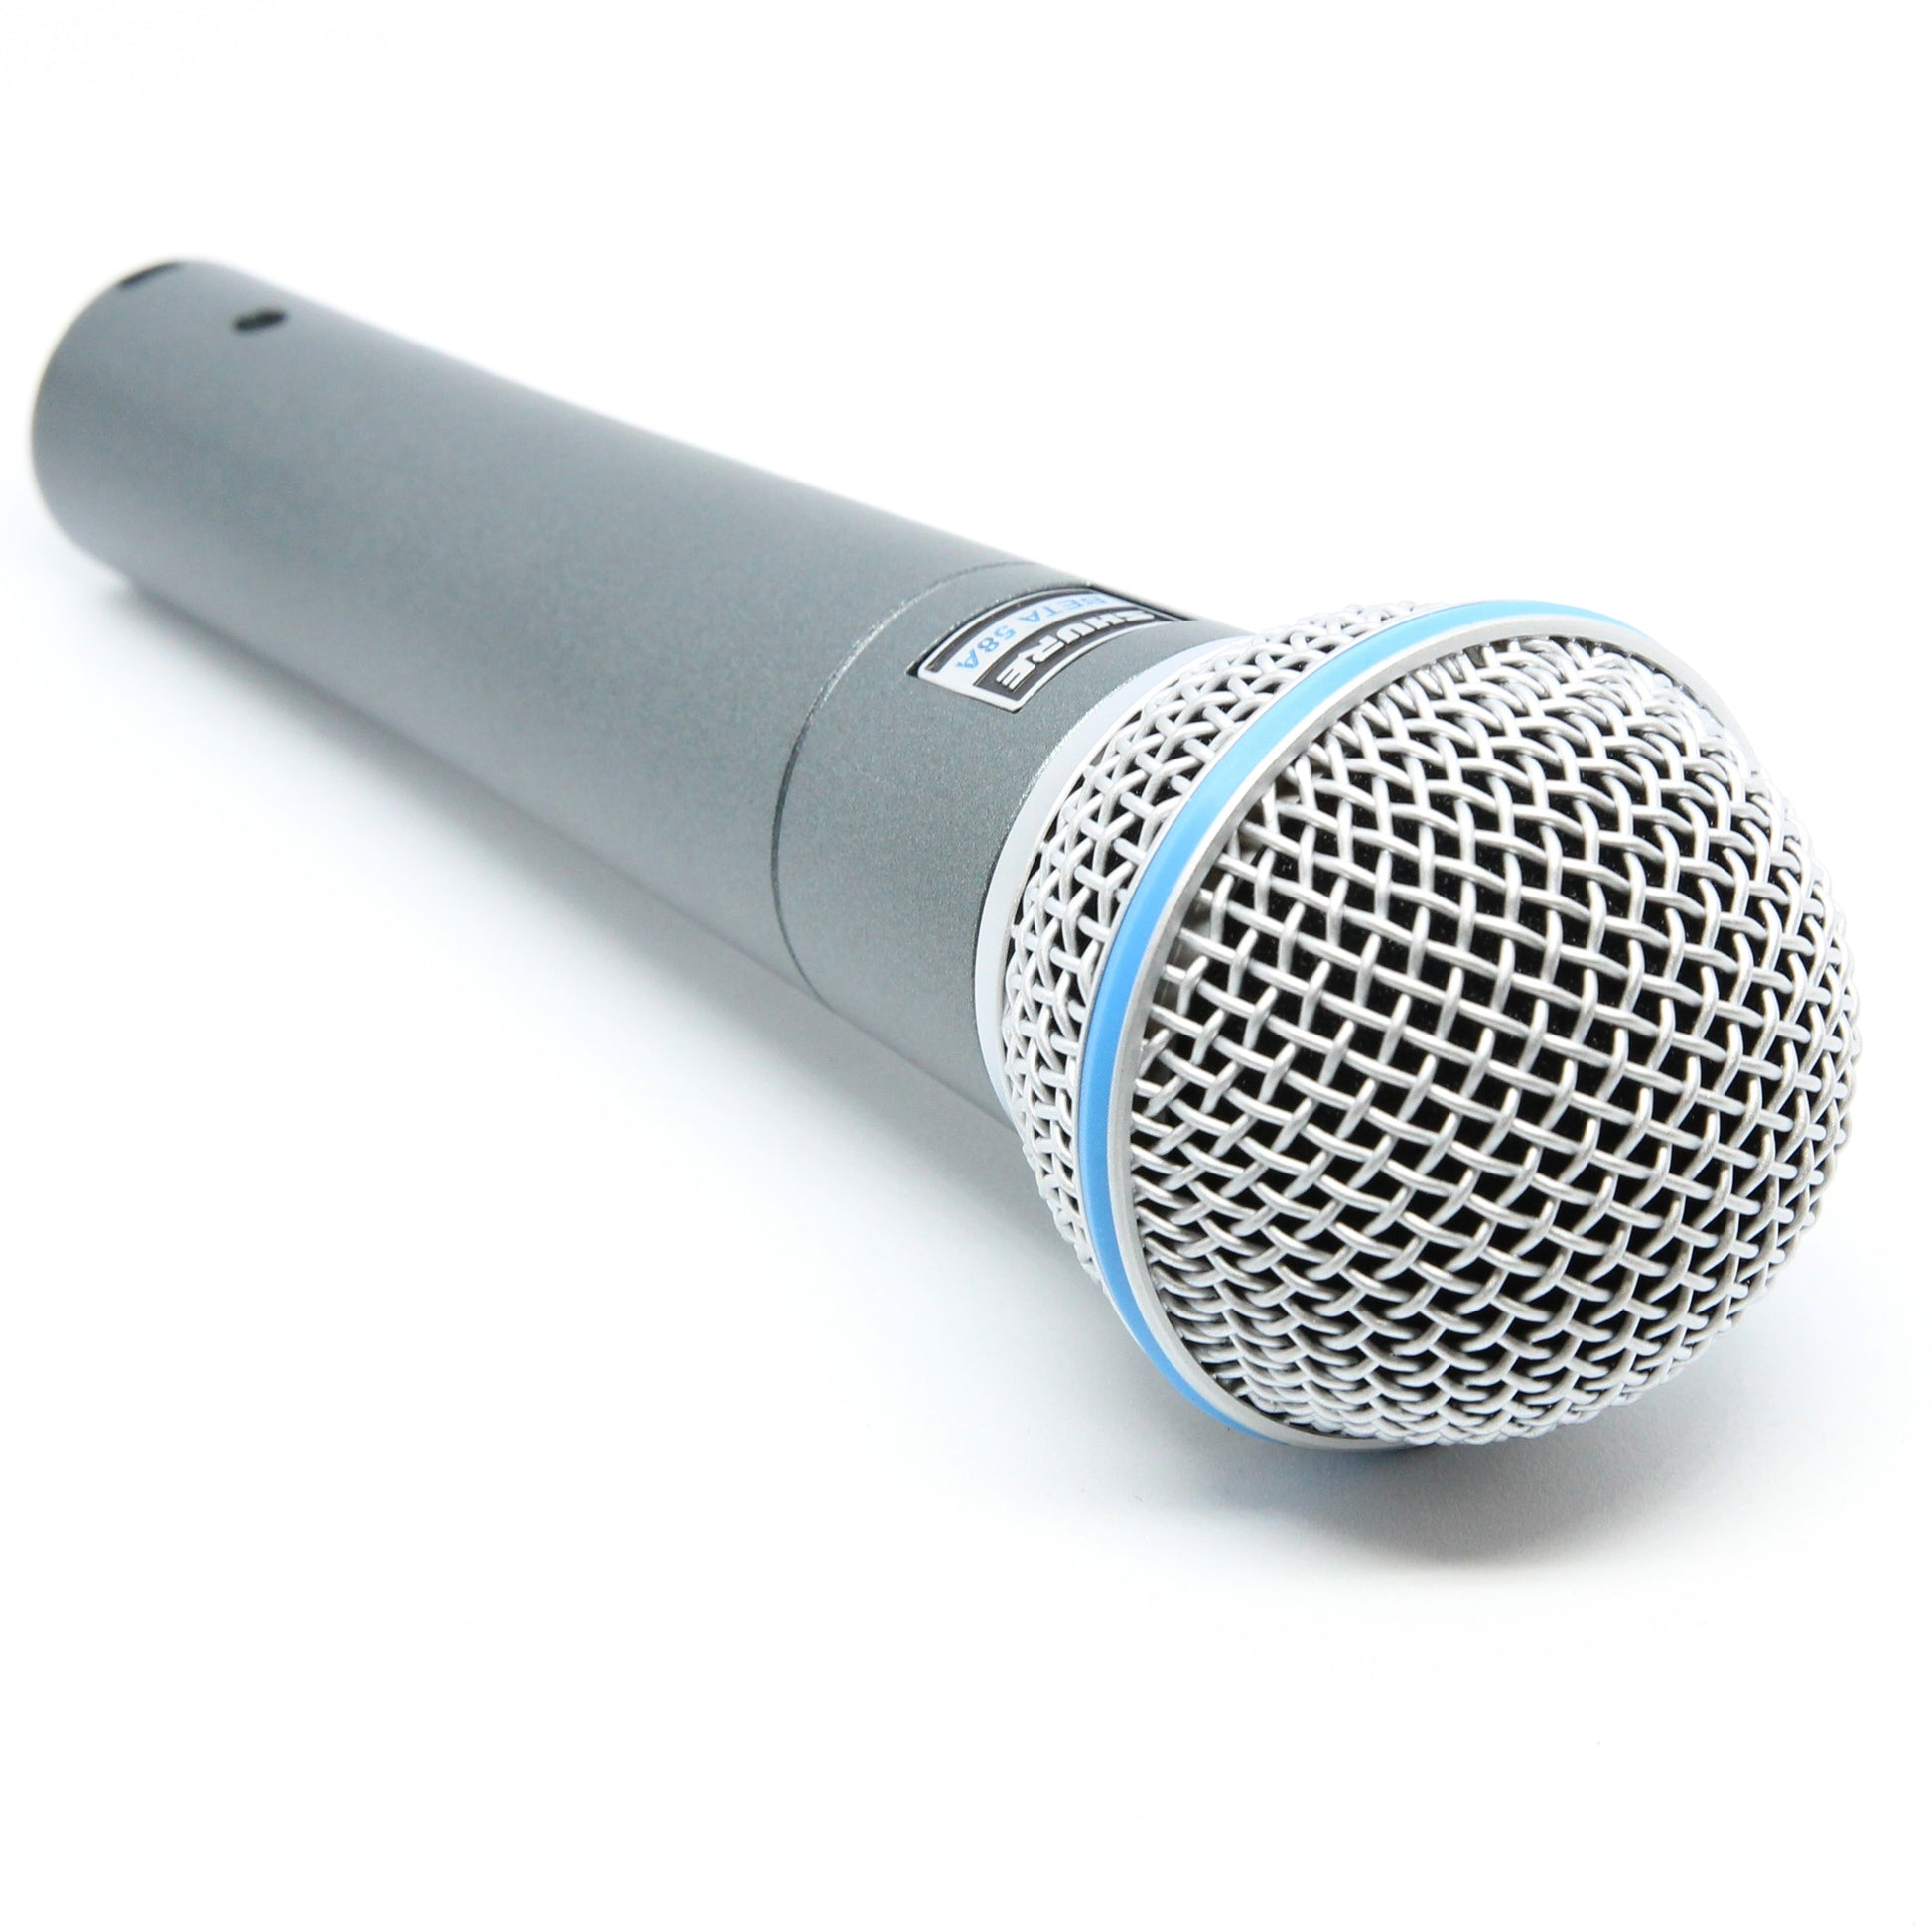 BETA® 58A - Vocal Microphone - Shure USA